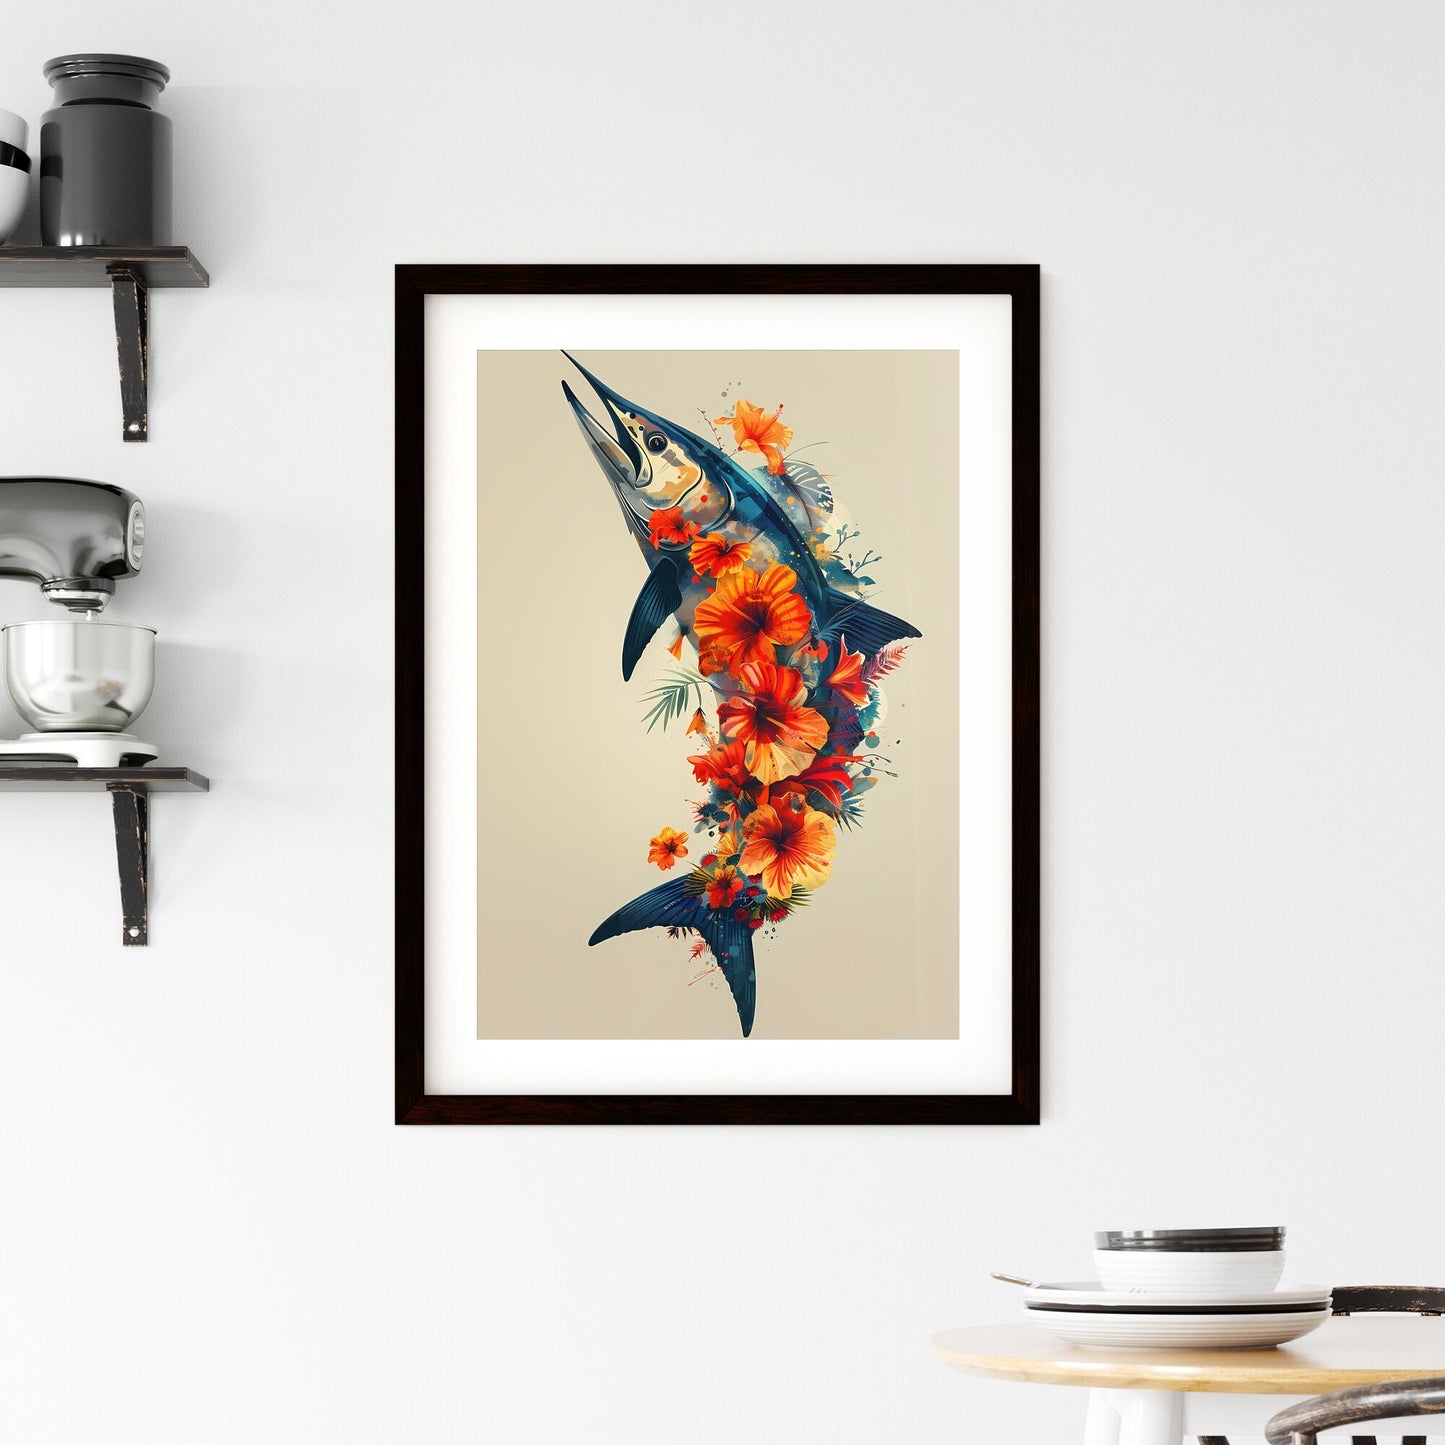 Elegant Floral Marlin Silhouette: Vibrant Art Print Adorned with Tropical Floral Patterns Default Title